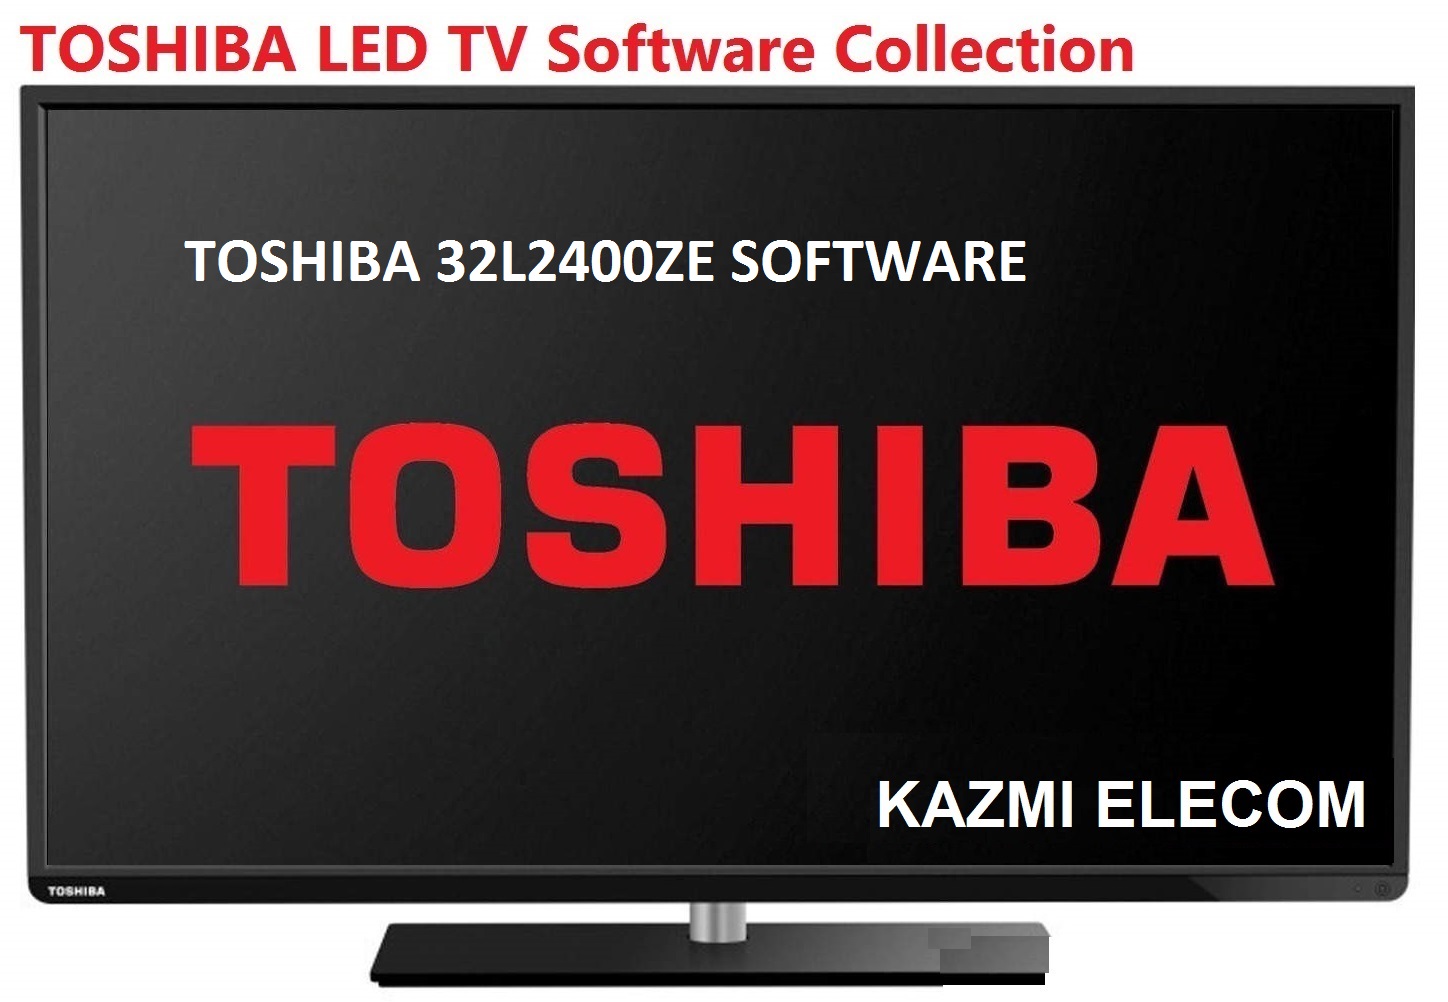 Toshiba 32L2400Ze